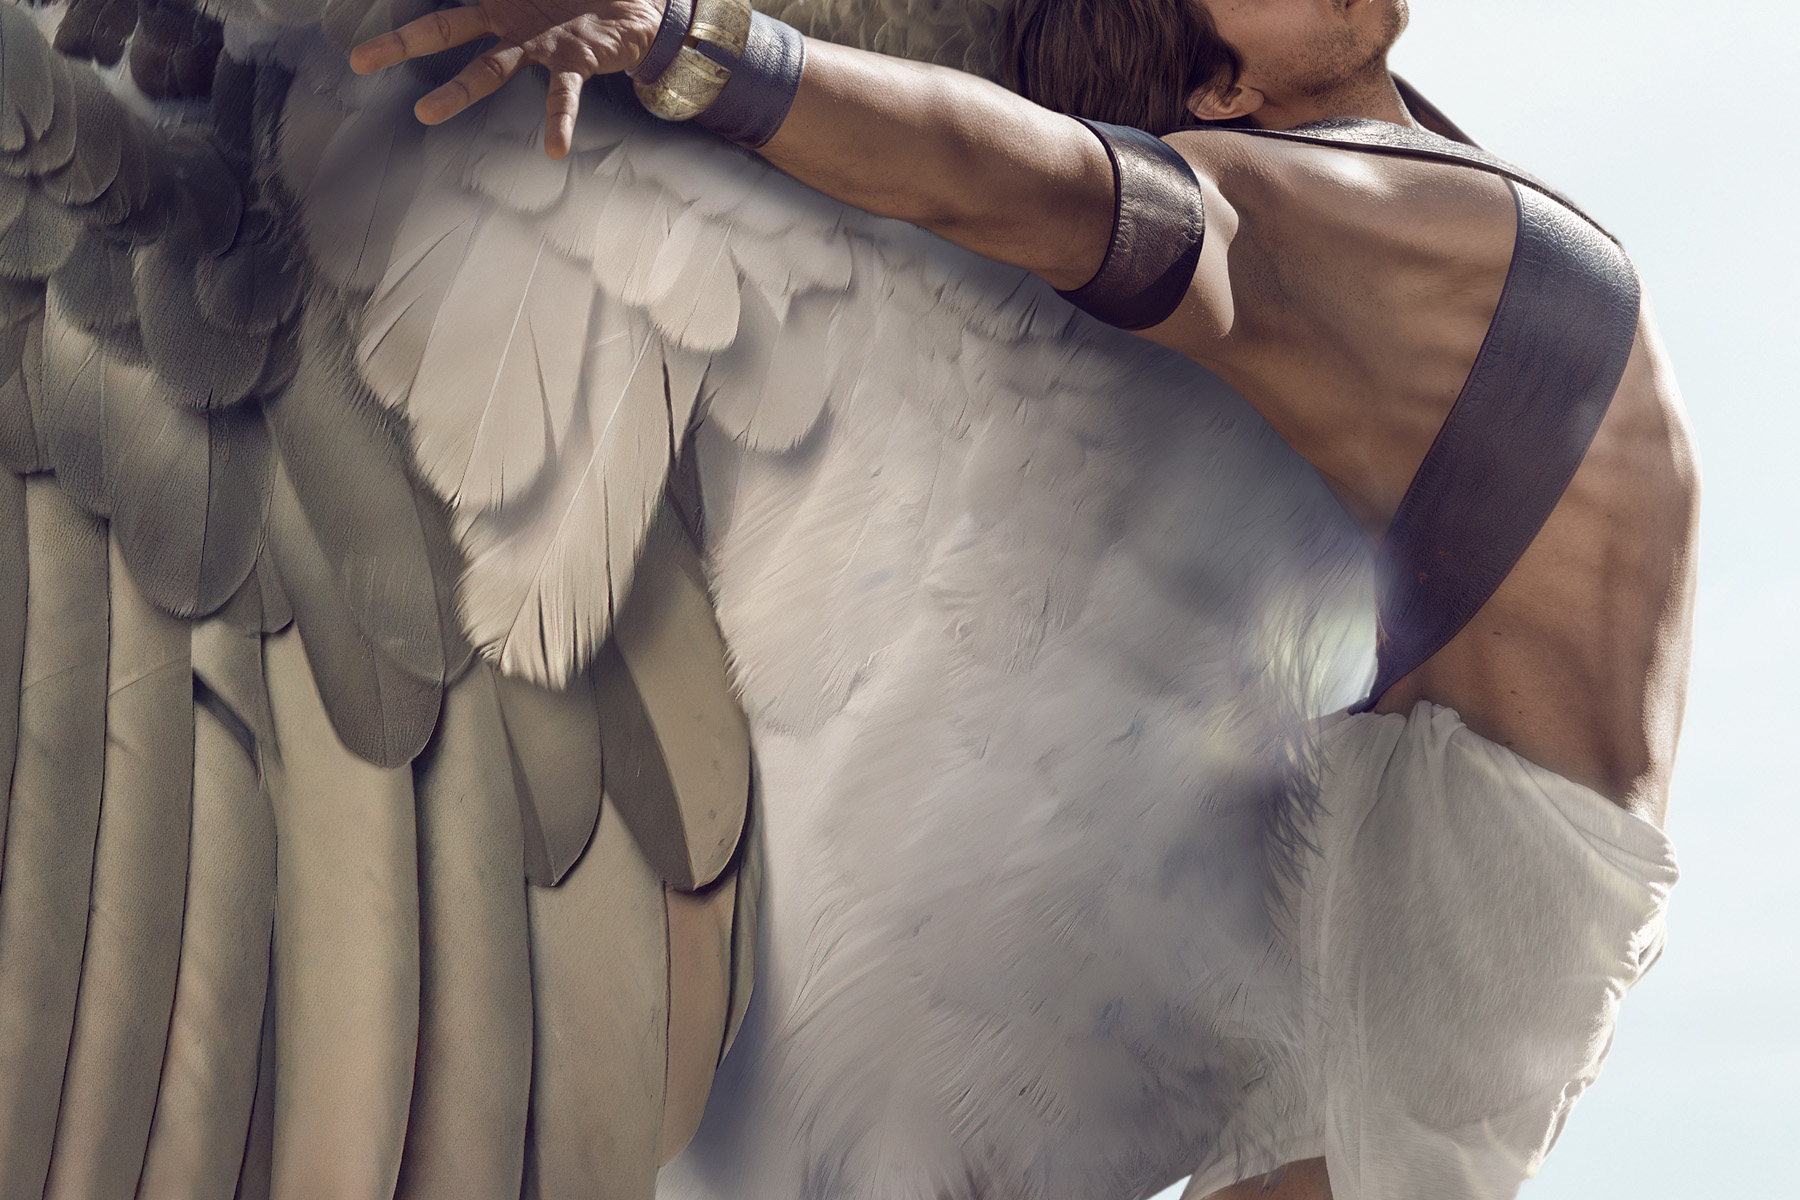 Icarus painting details torso and historic bracelet